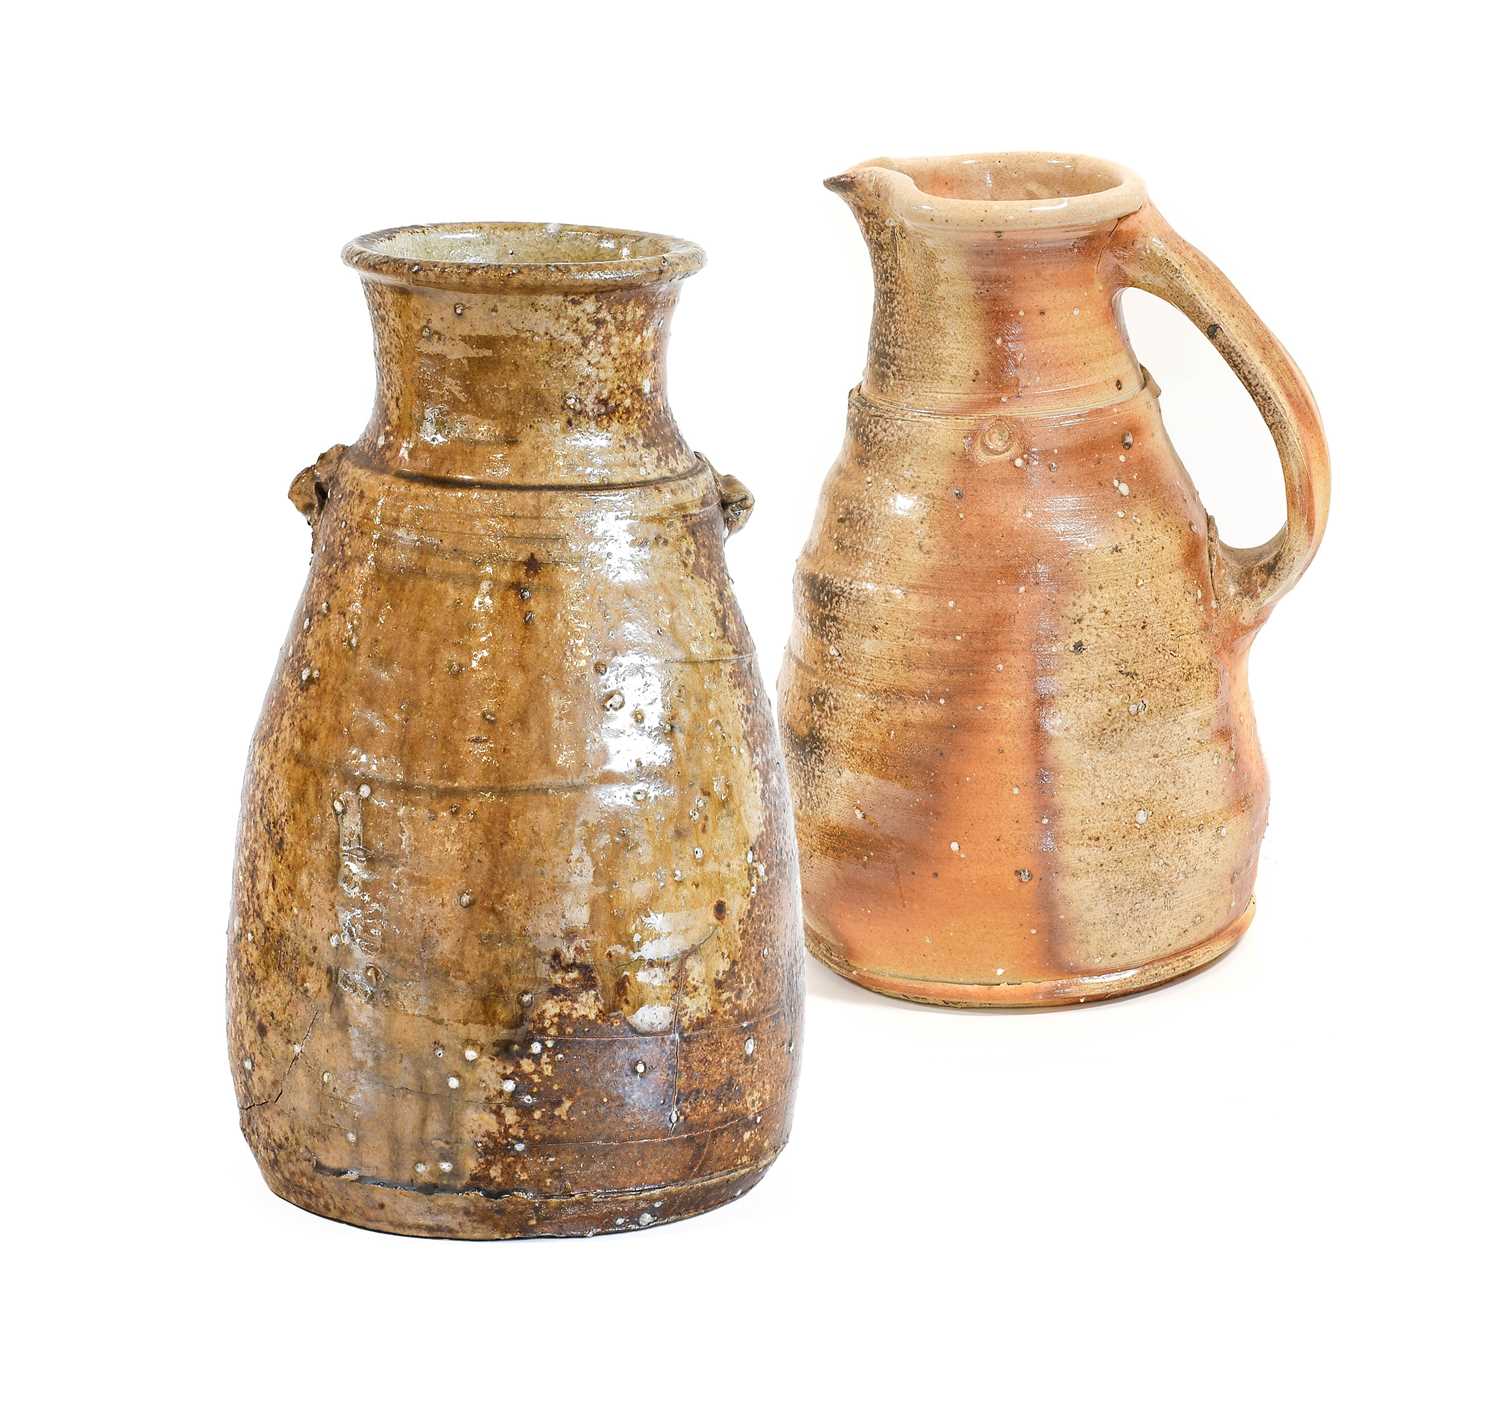 Nic Collins (b.1958): A Wood Fired Stoneware Jar, with two lug handles, incised Nic Collins,